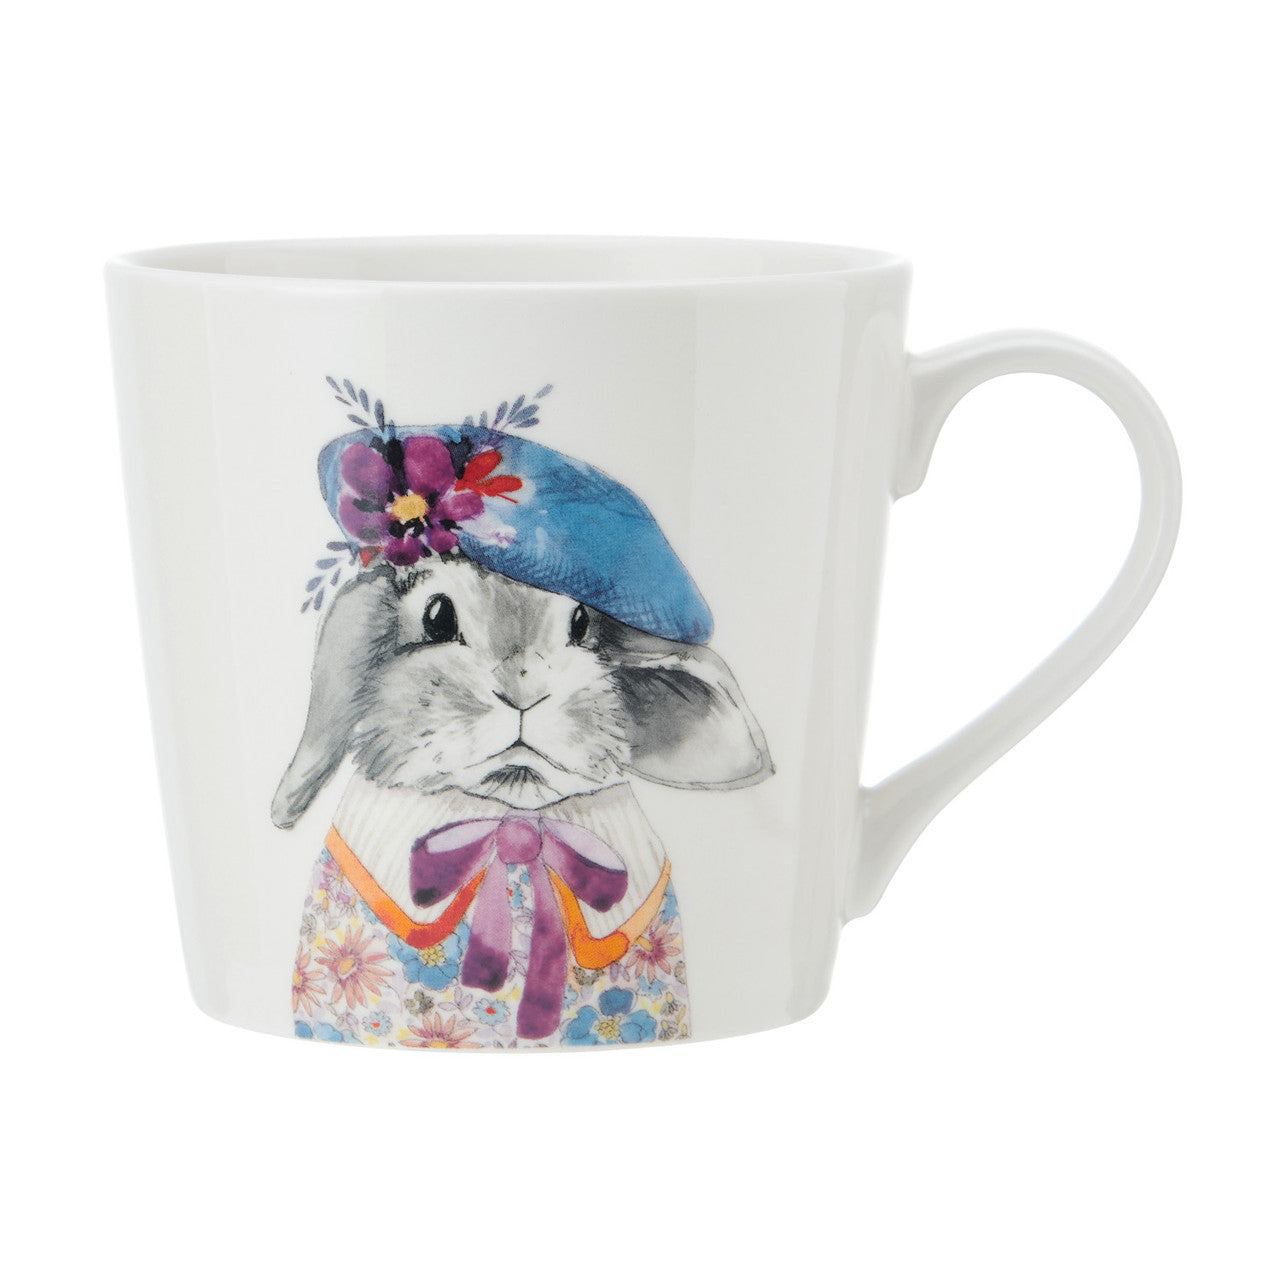 Mikasa Tipperleyhill Rabbit Print Porcelain Mug 380ml